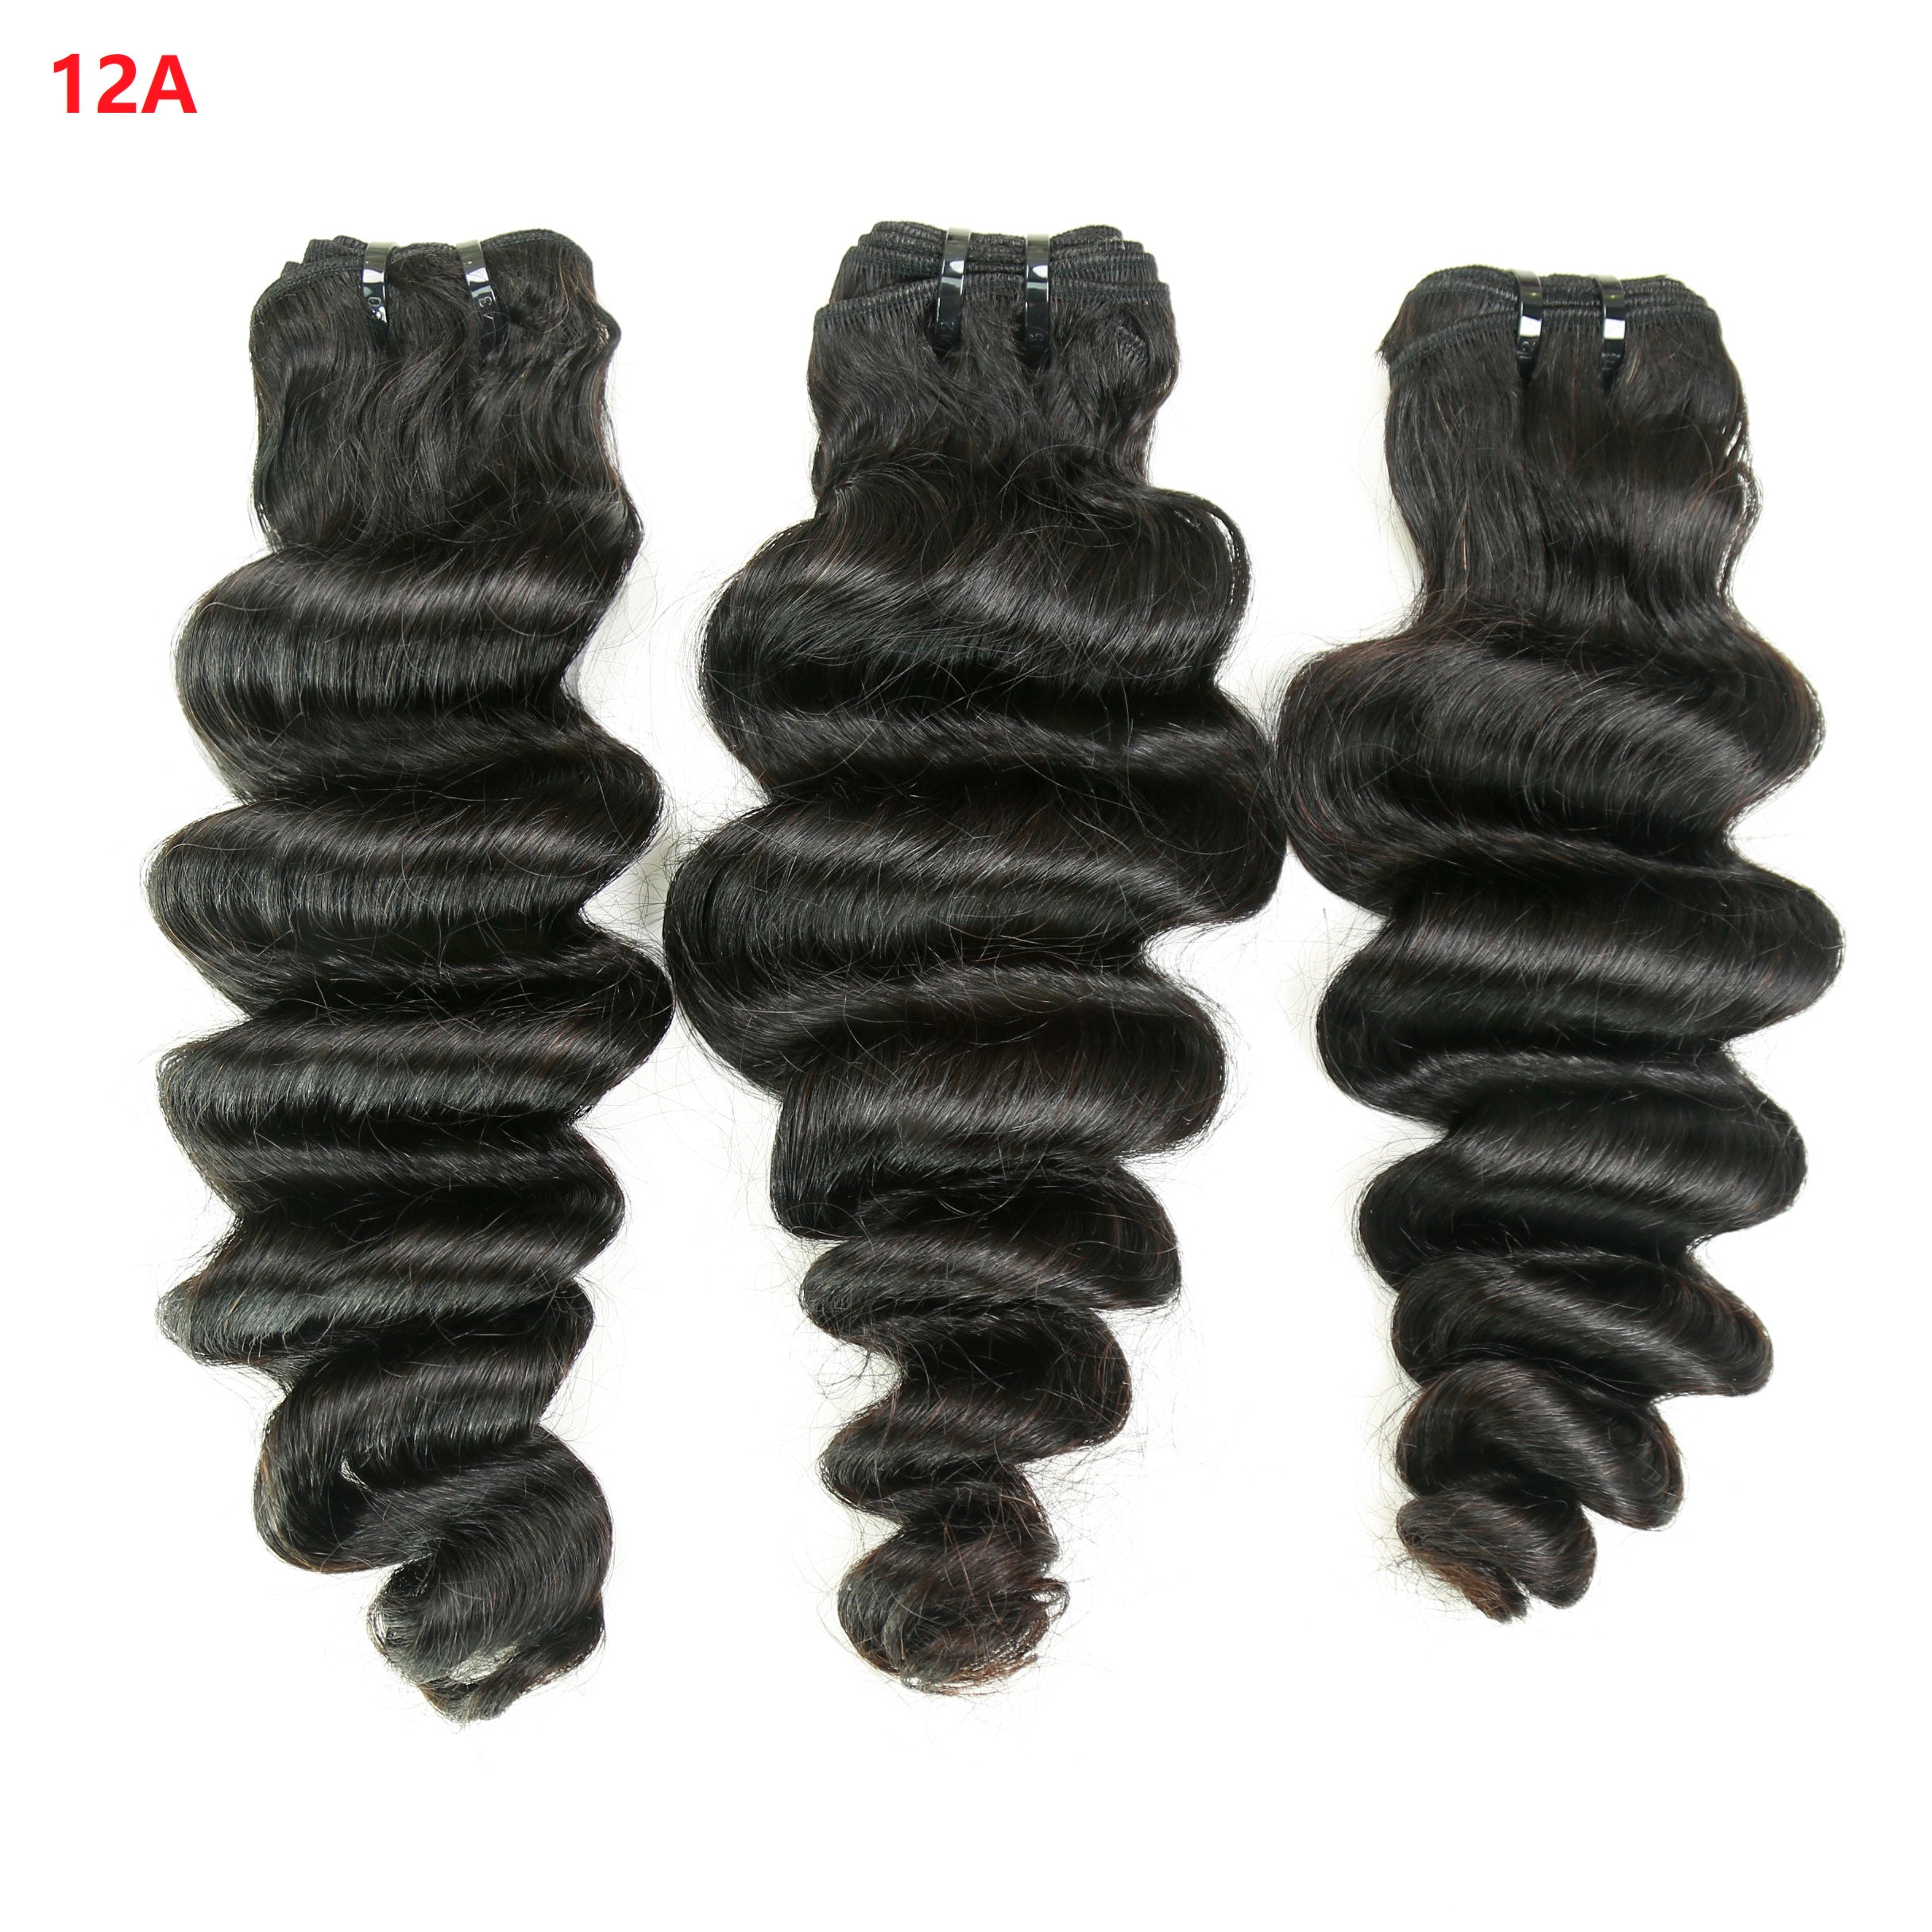 JP Hair 9A/10A/12A Loose Deep 3 Bundles with 13x6 Frontal